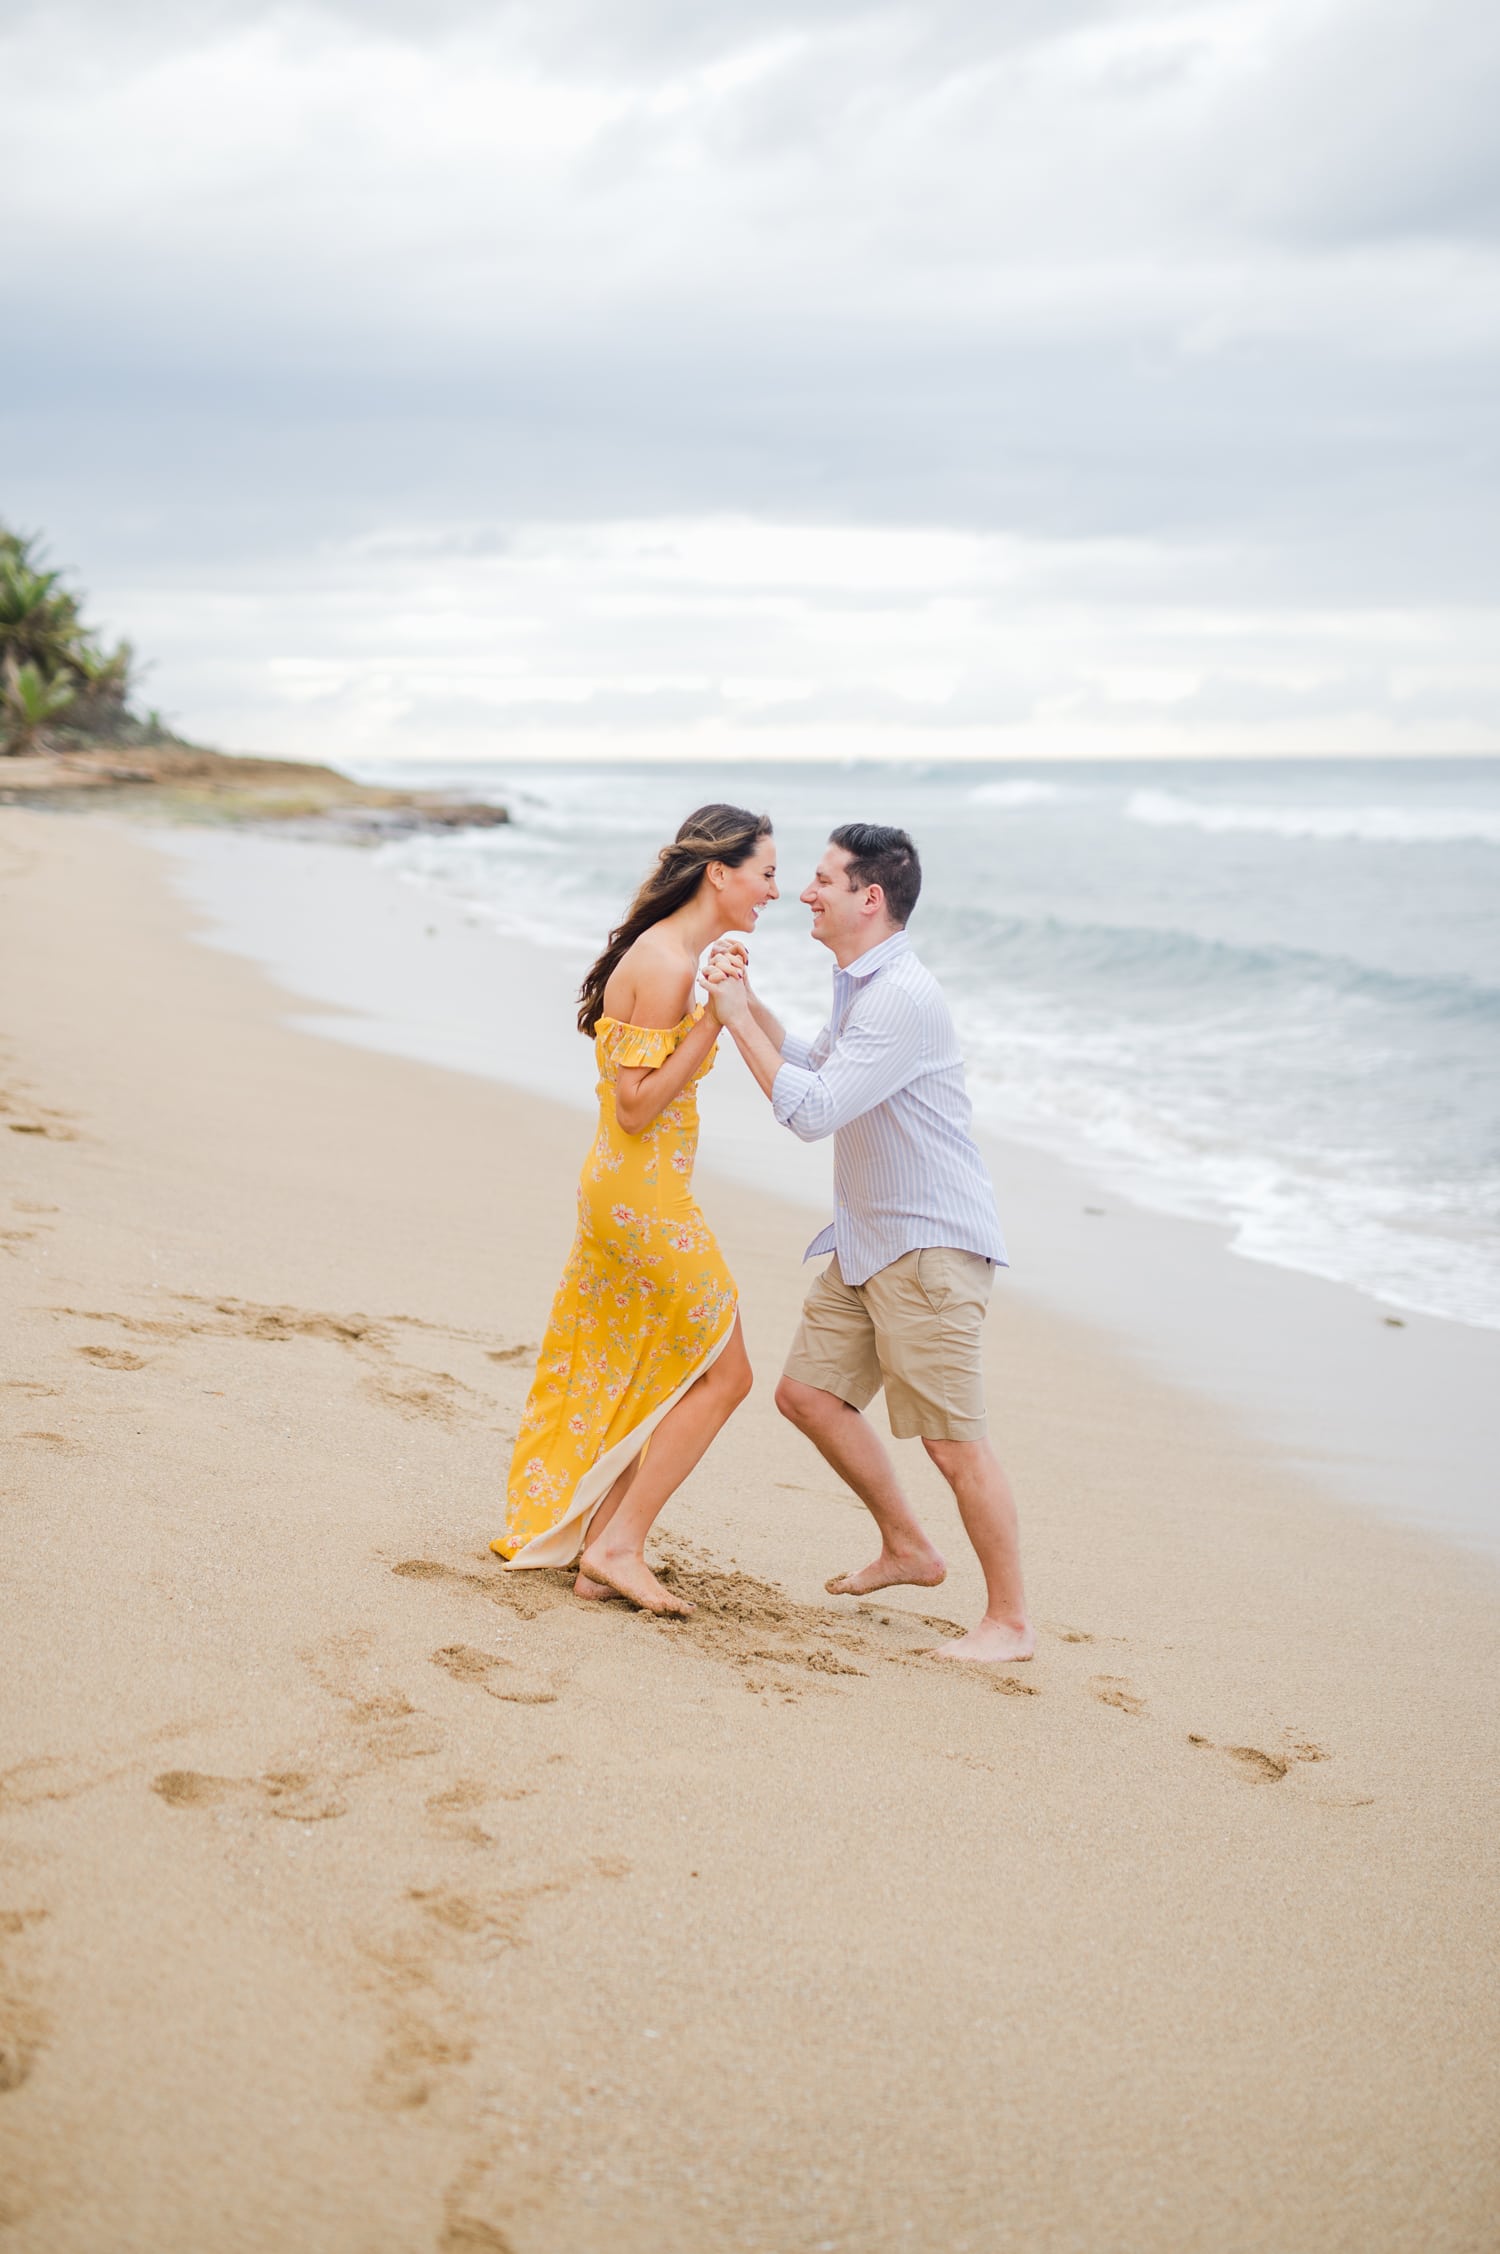 wedding photographer Camille Fontz captures a beach engagement portrait session in Aguadilla, Puerto Rico